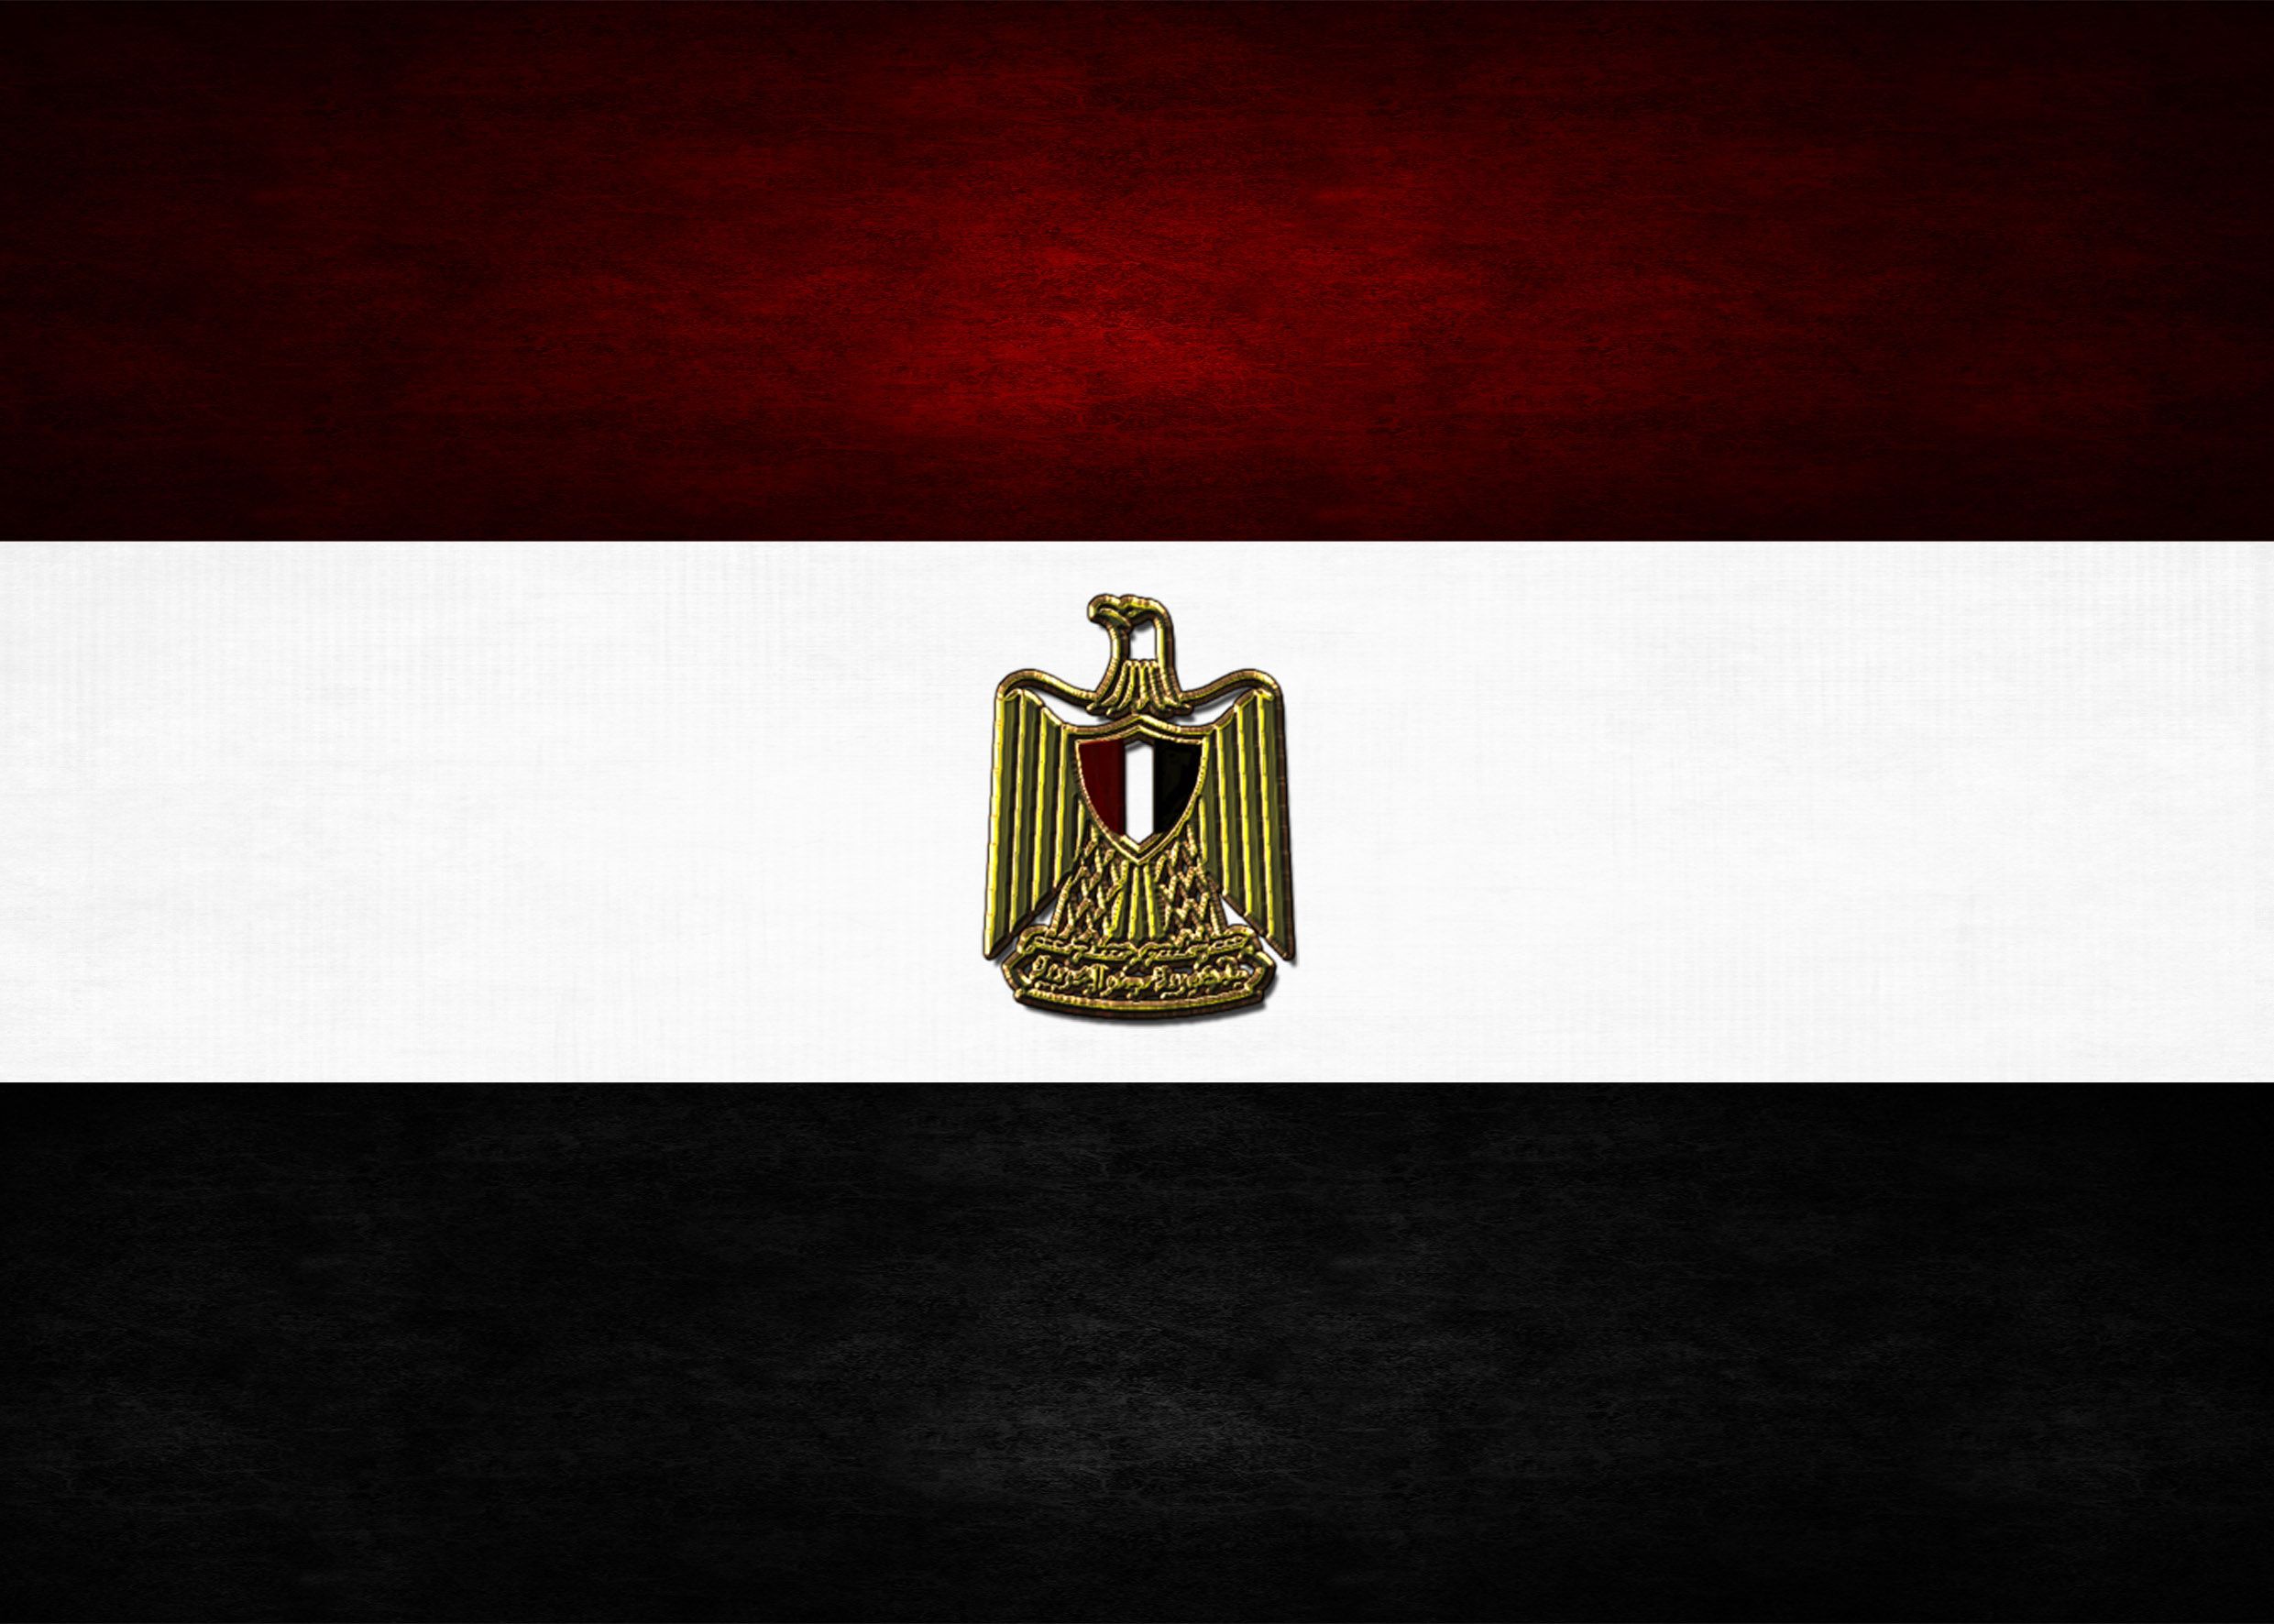 EGYPT FLAG MODERN DESIGN by waitq on DeviantArt